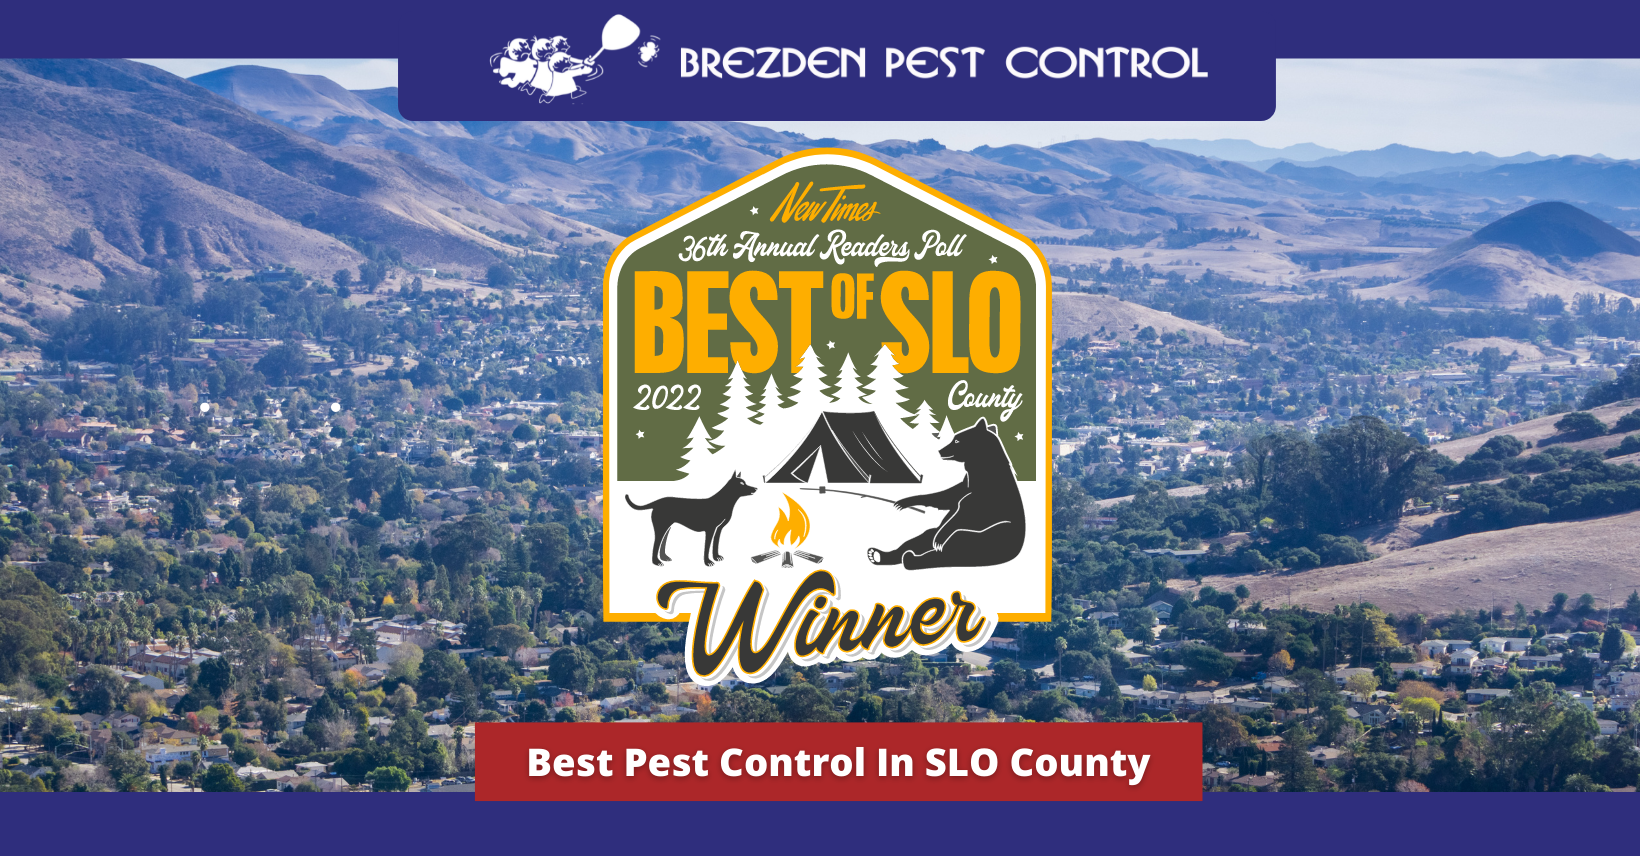 Brezden Pest Control Wins Best Of Slo Award